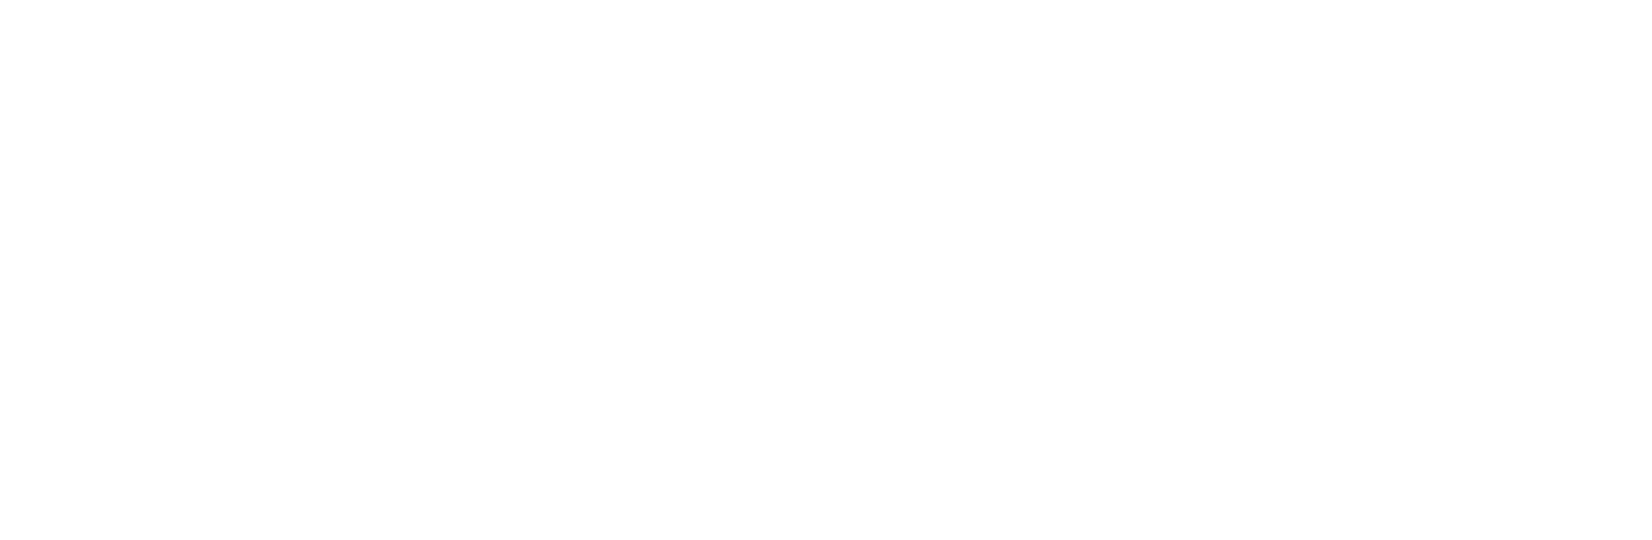 Visit Jyväskylä Regionin logo